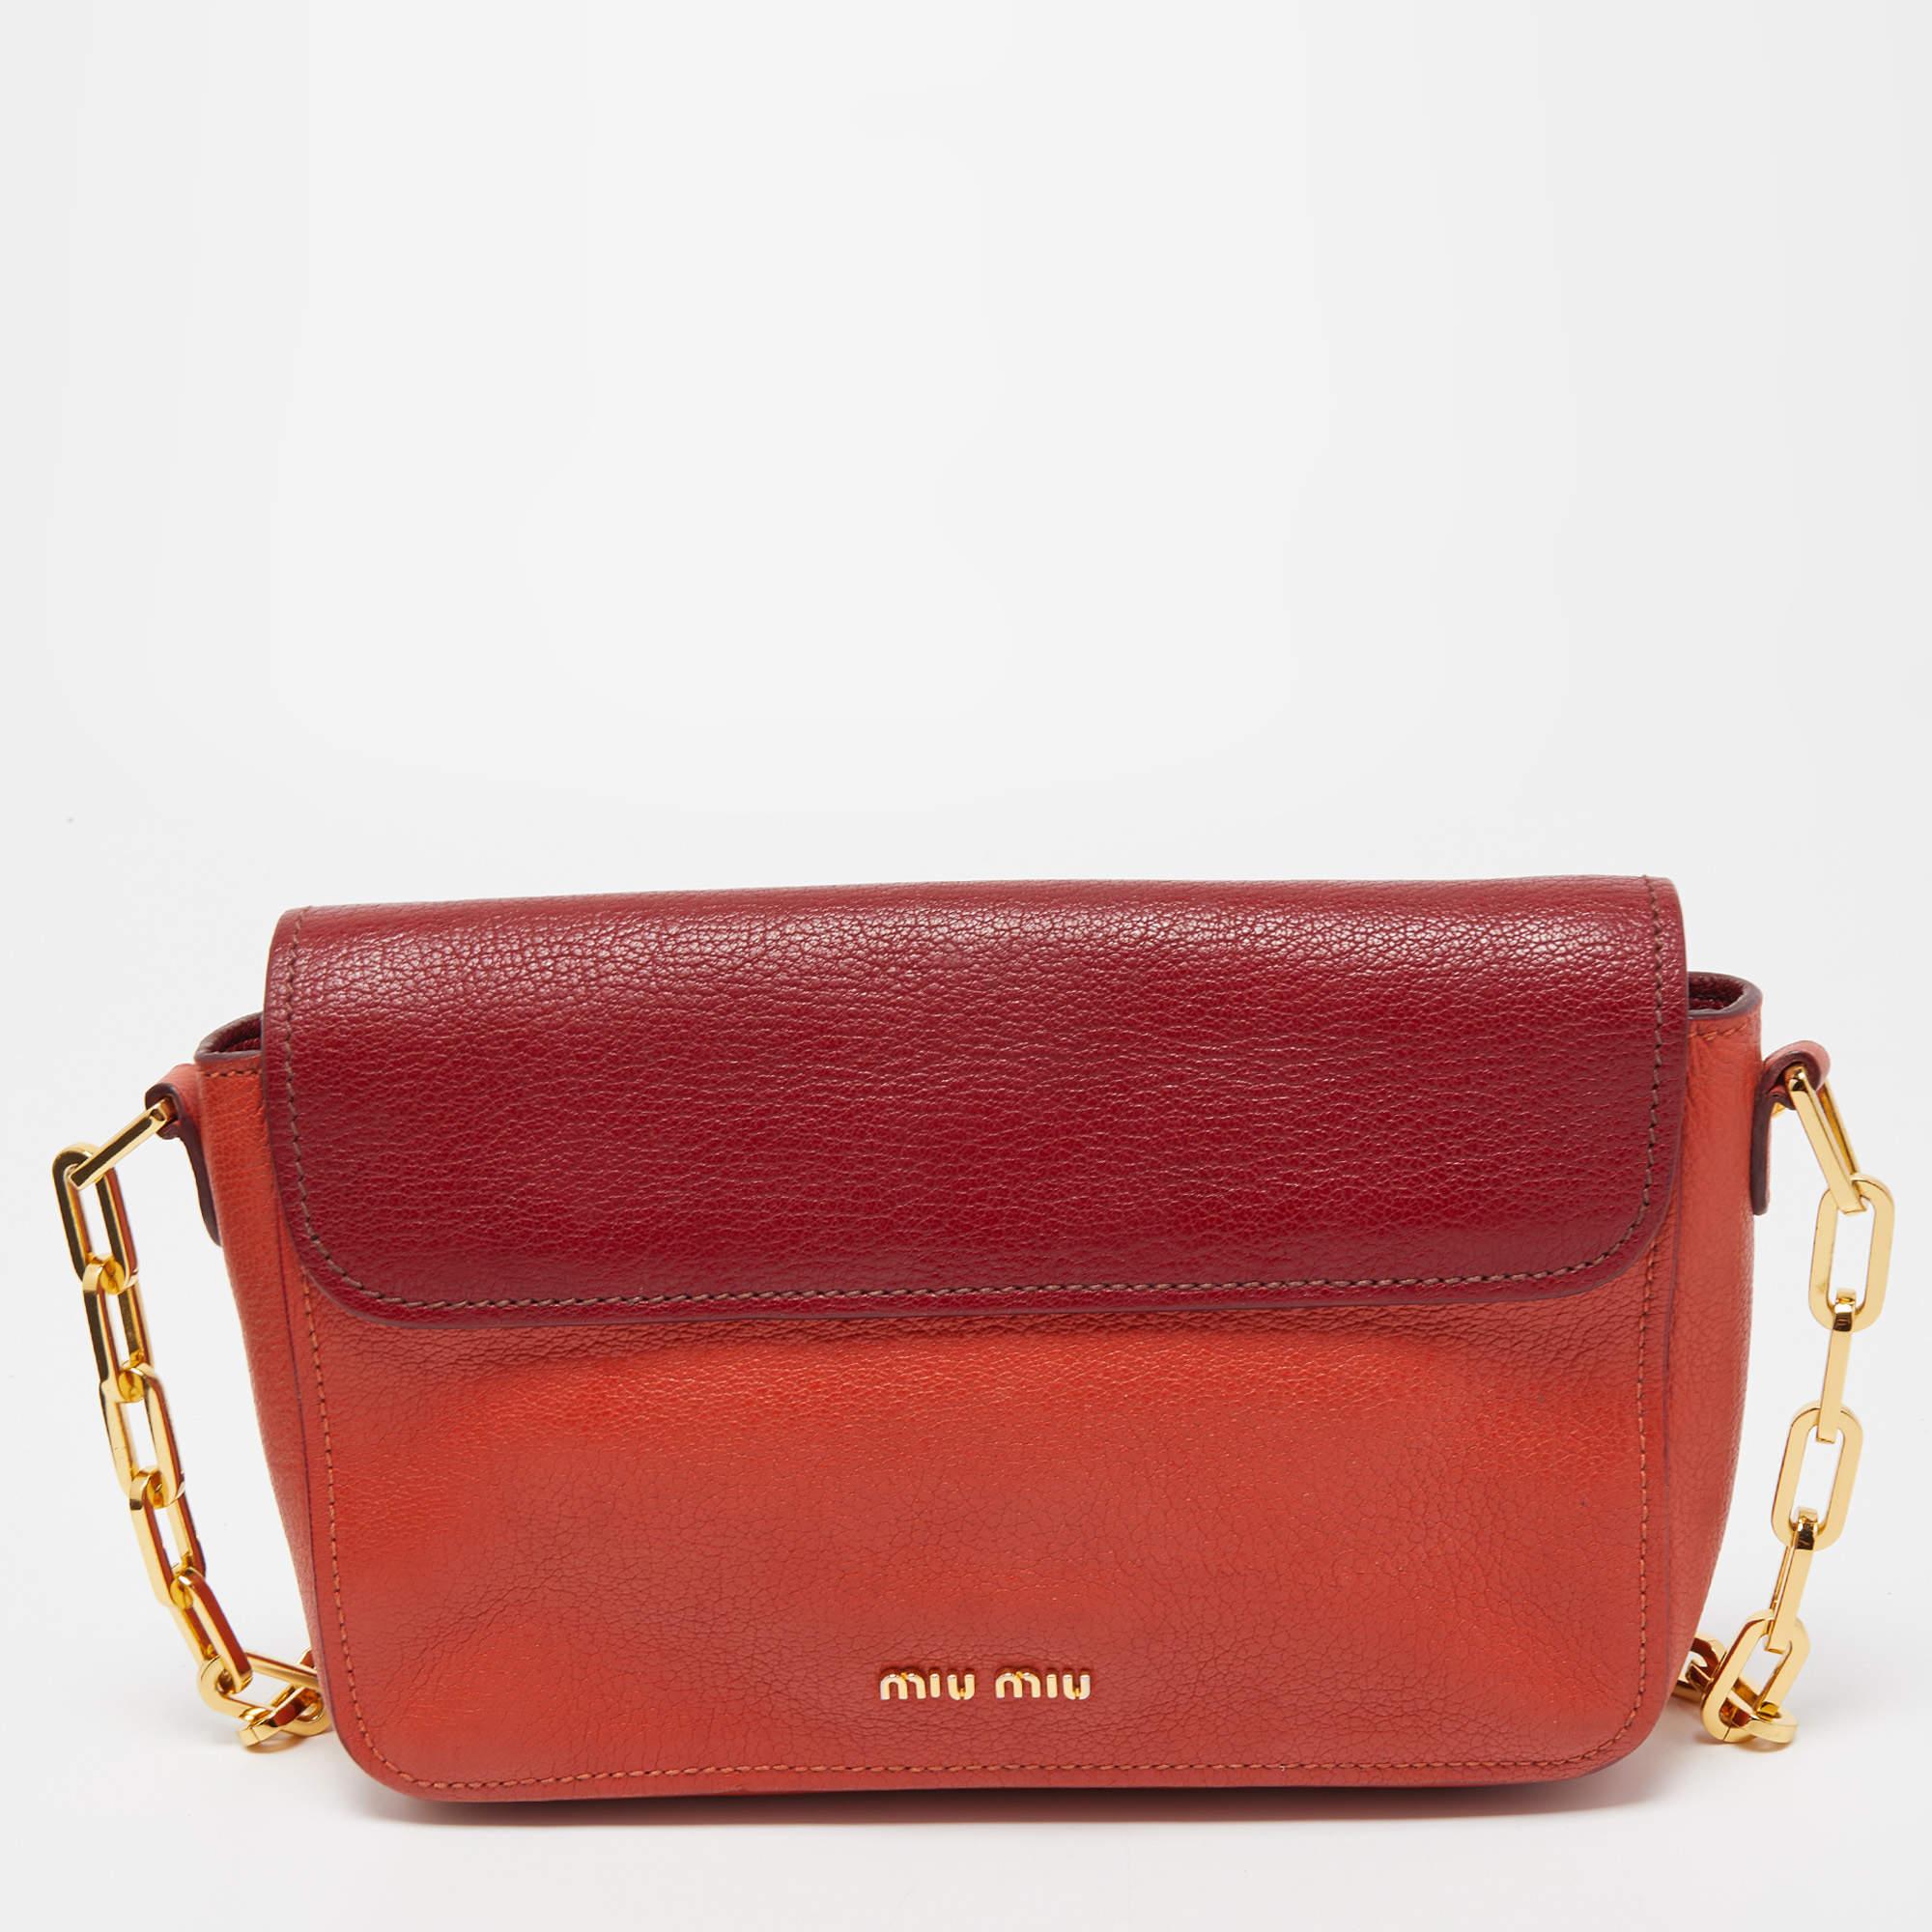 Miu Miu Orange/Red Madras Leather Pushlock Flap Chain Shoulder Bag 1